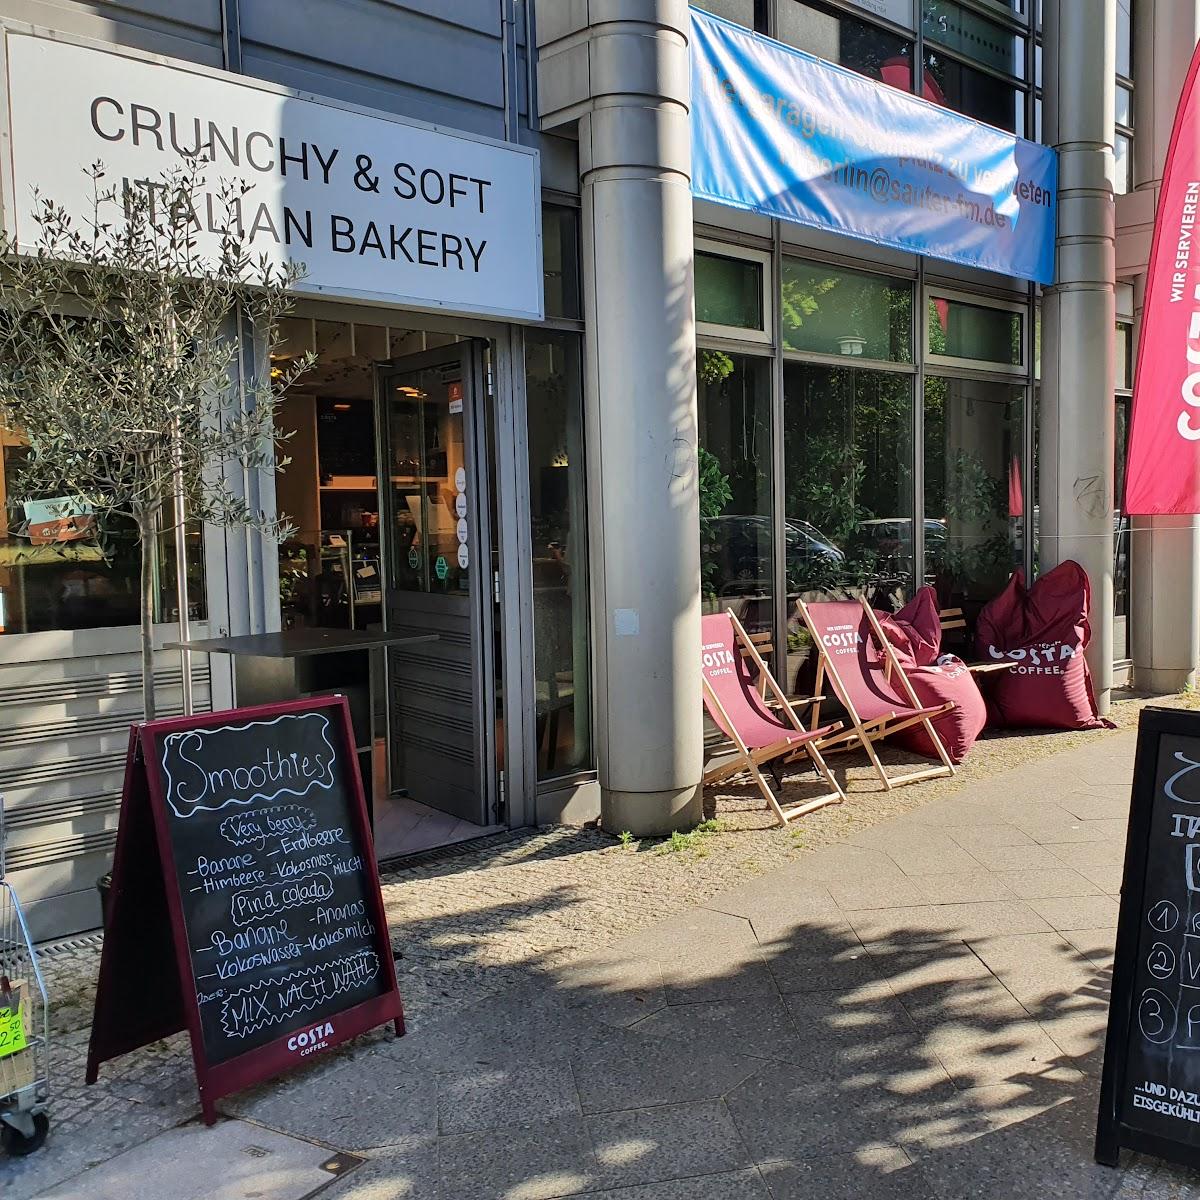 Restaurant "Crunchy & Soft Bakery" in Berlin